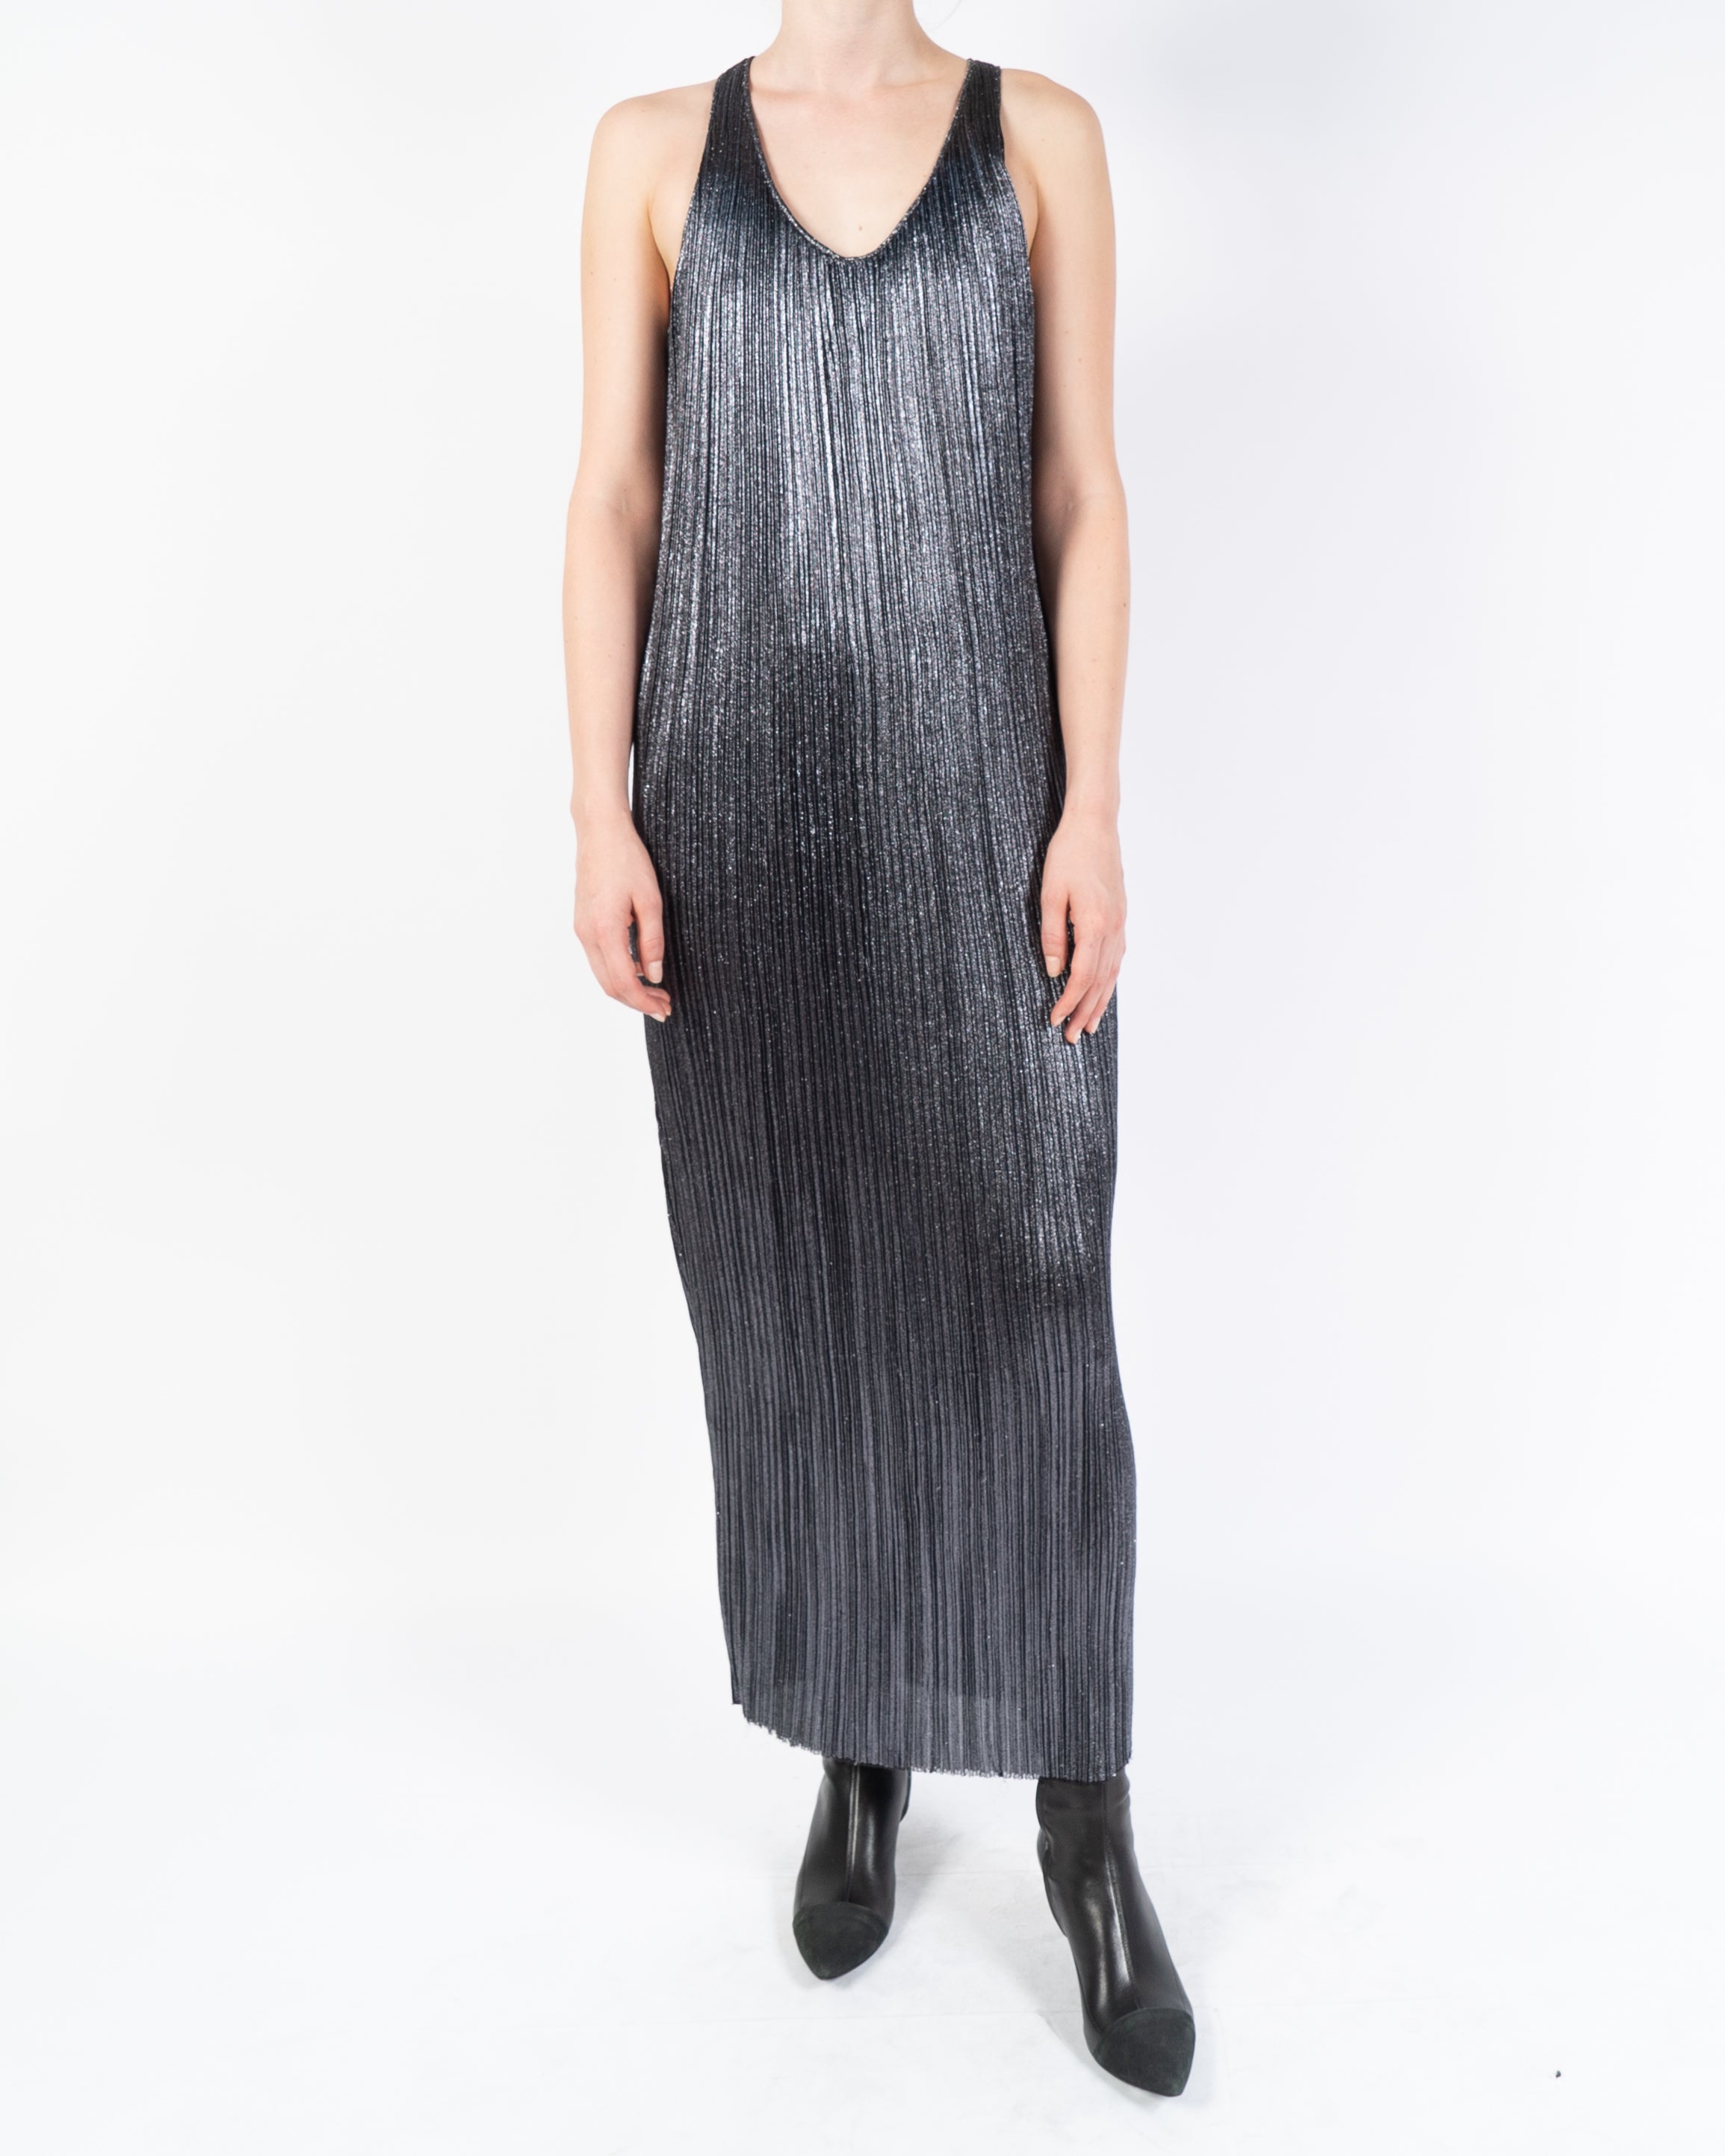 SS17 Pleated Glitter Dress in Silver Viscose